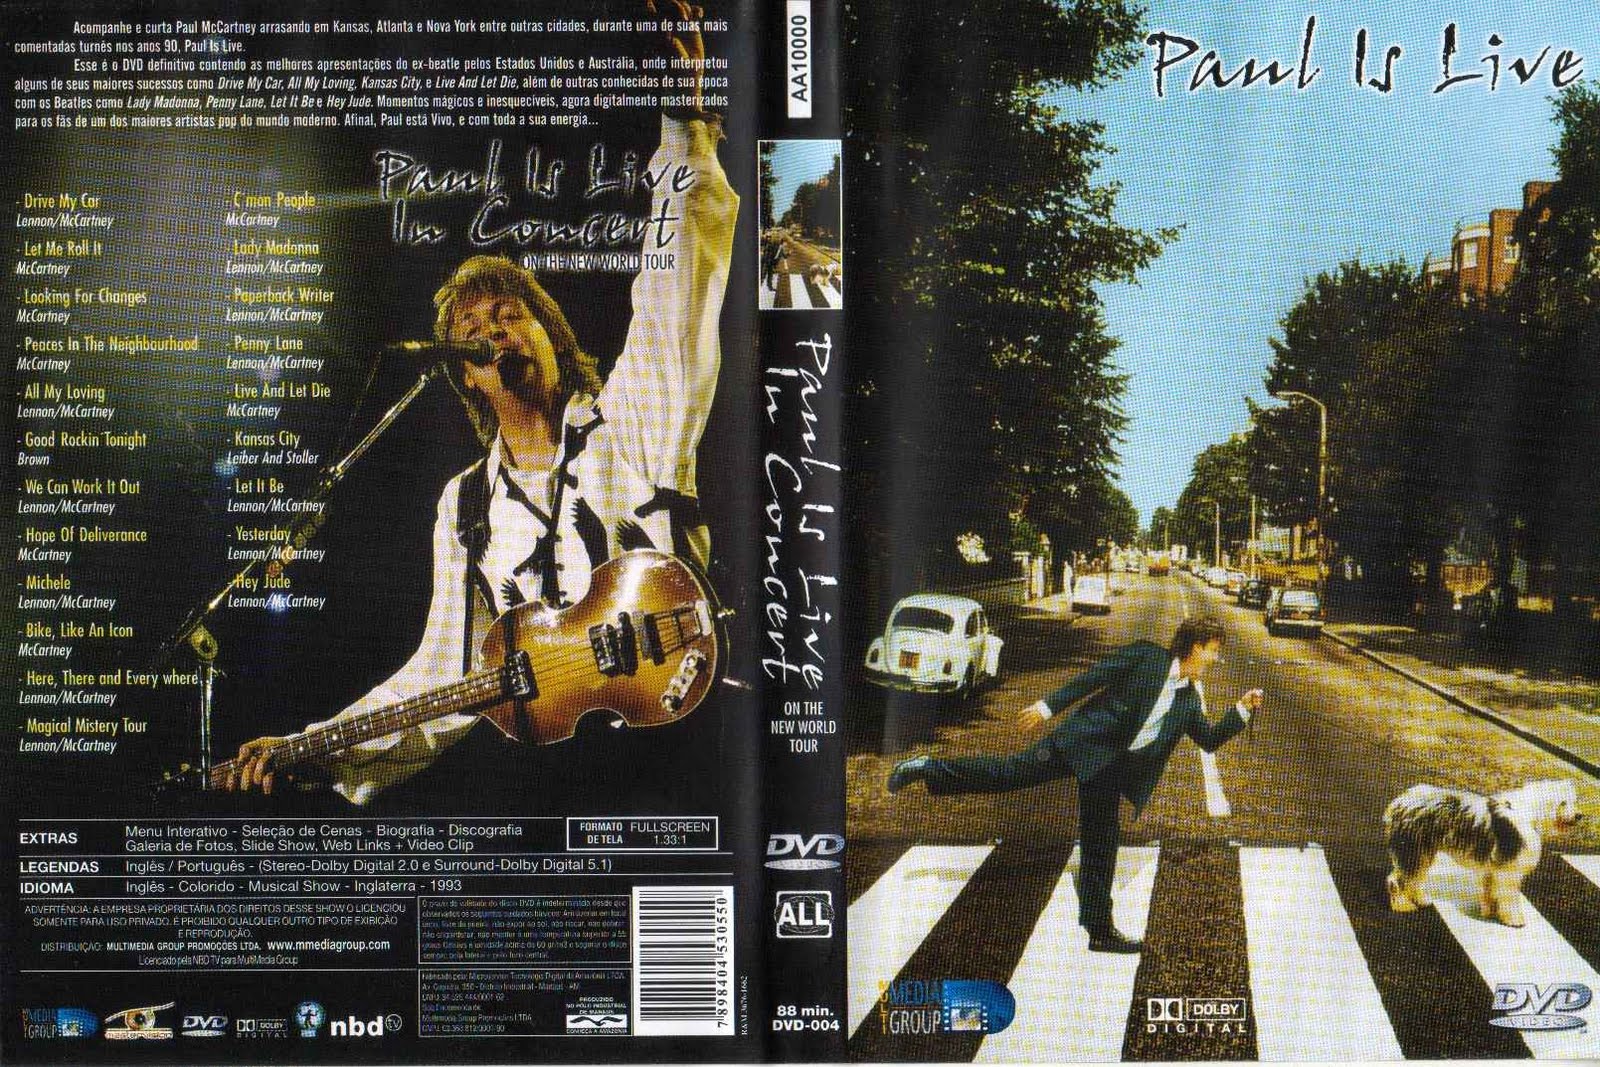 Paul mccartney live. Paul is Live 1993. Paul is Live пол Маккартни. Paul MCCARTNEY Live 2008. Paul MCCARTNEY Live 2008 Tour.